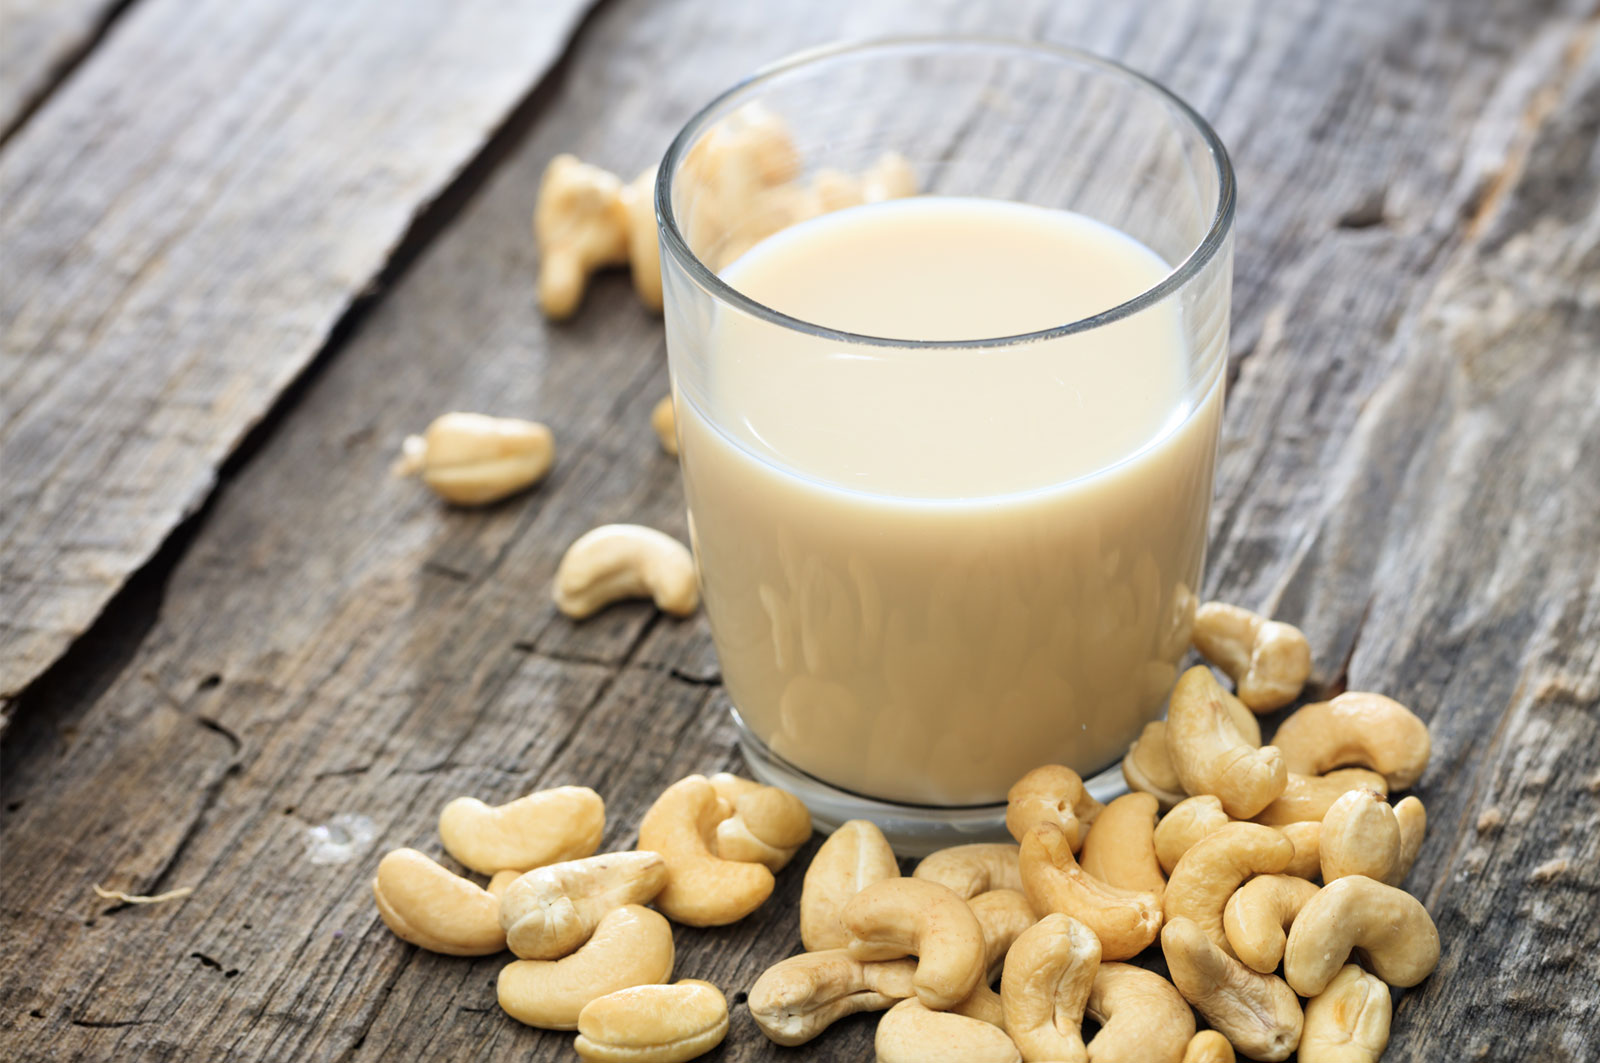 Cashew Milk Benefits